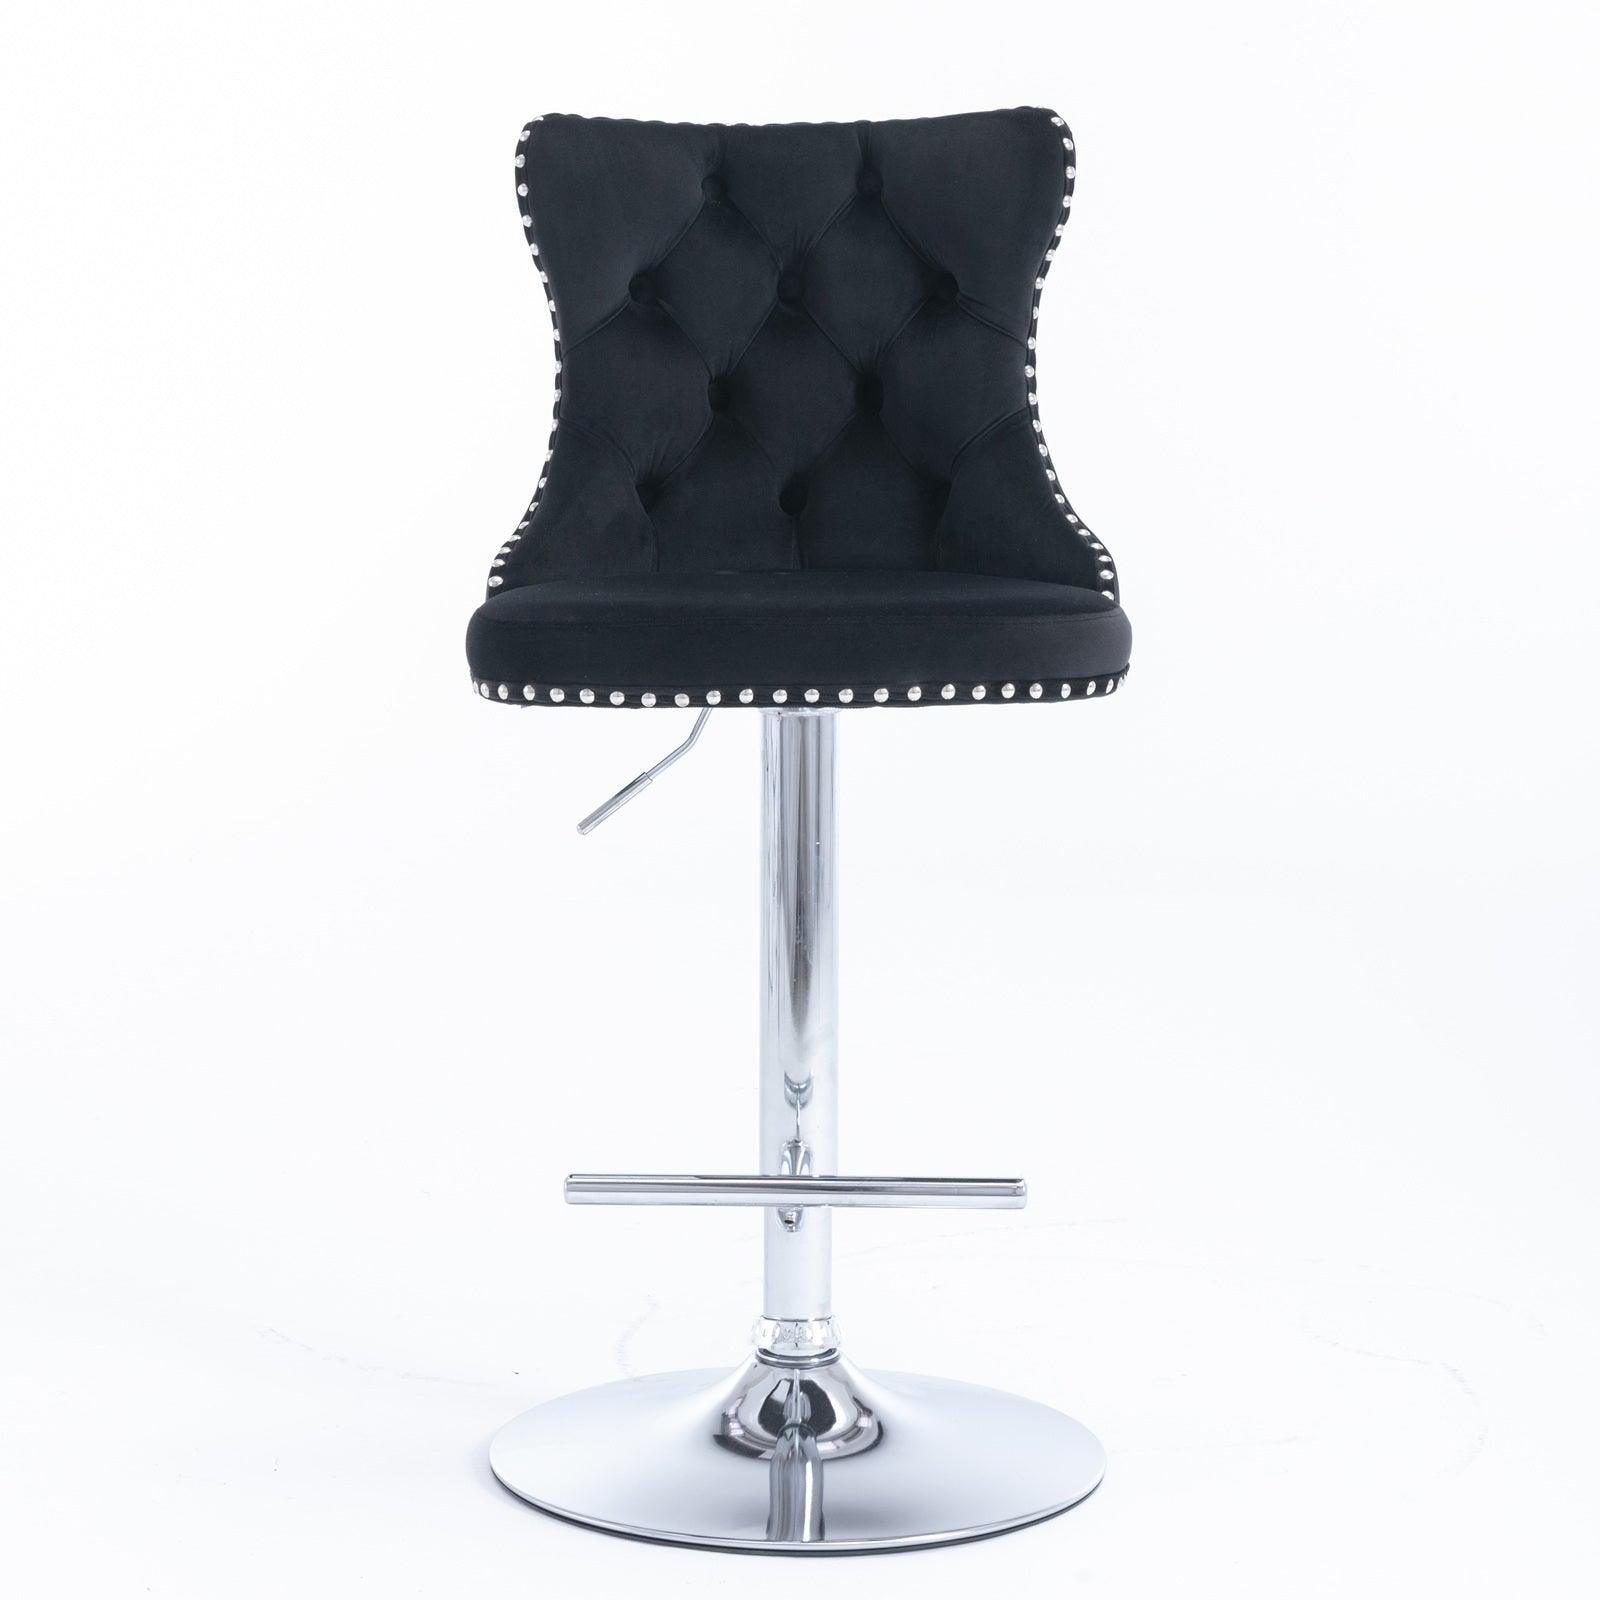 🆓🚛 Swivel Velvet Barstools Adjusatble Seat Height From 25-33 Inch, Modern Upholstered Chrome Base Bar Stools With Backs Comfortable Tufted for Home Pub & Kitchen Island（Black, Set Of 2）